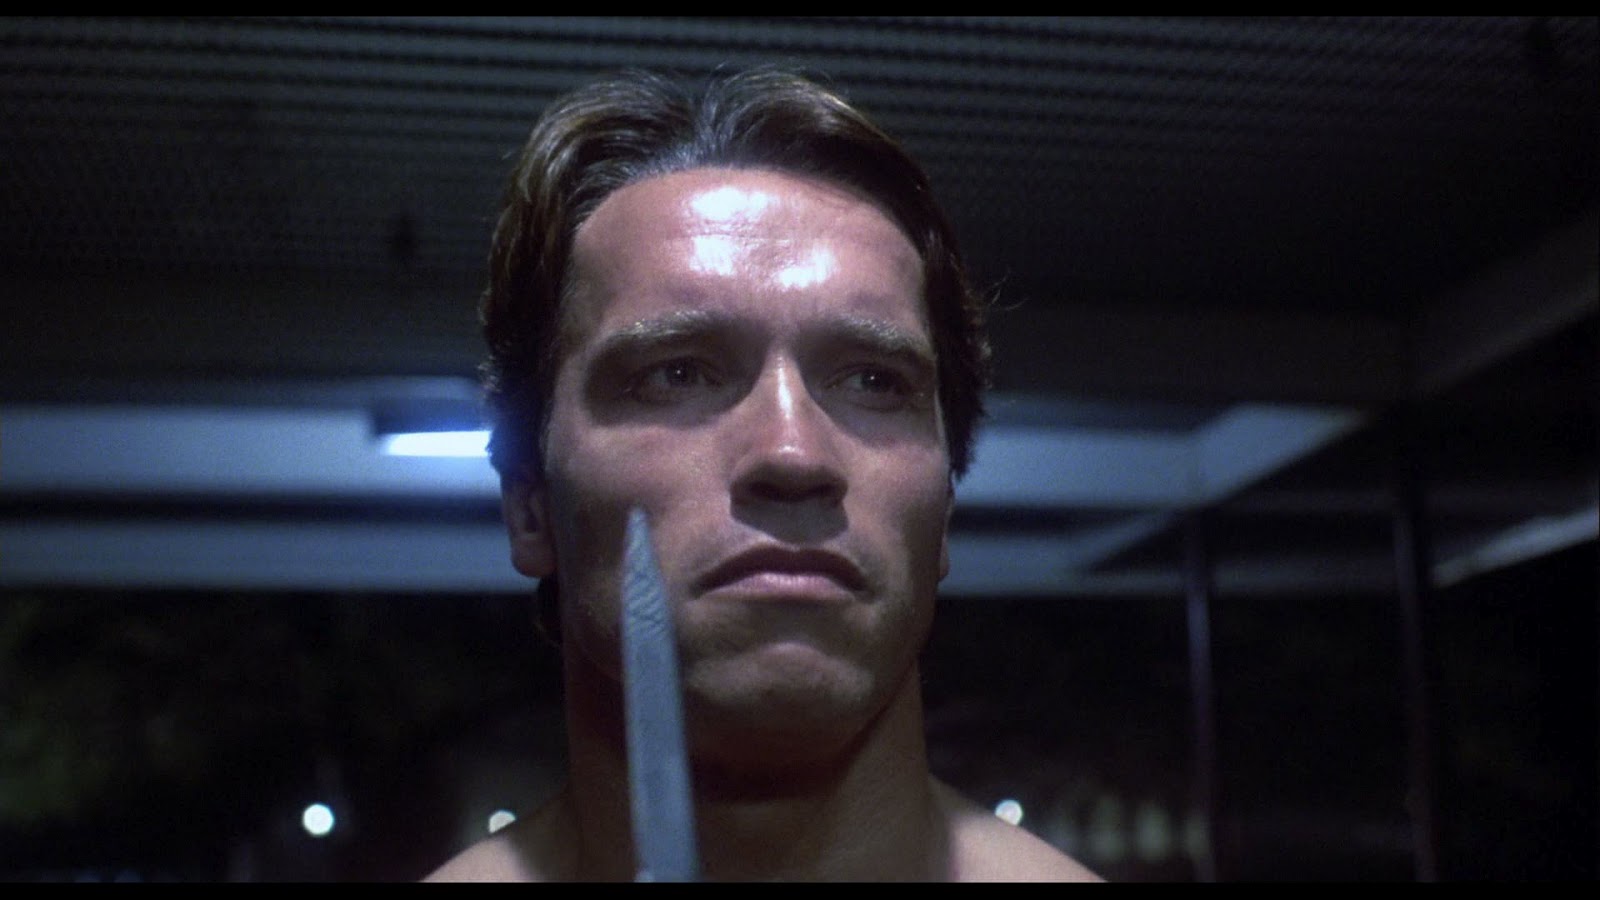 Terminator 3 full movie 1984 torrent 32 sonatas de beethoven barenboim torrent